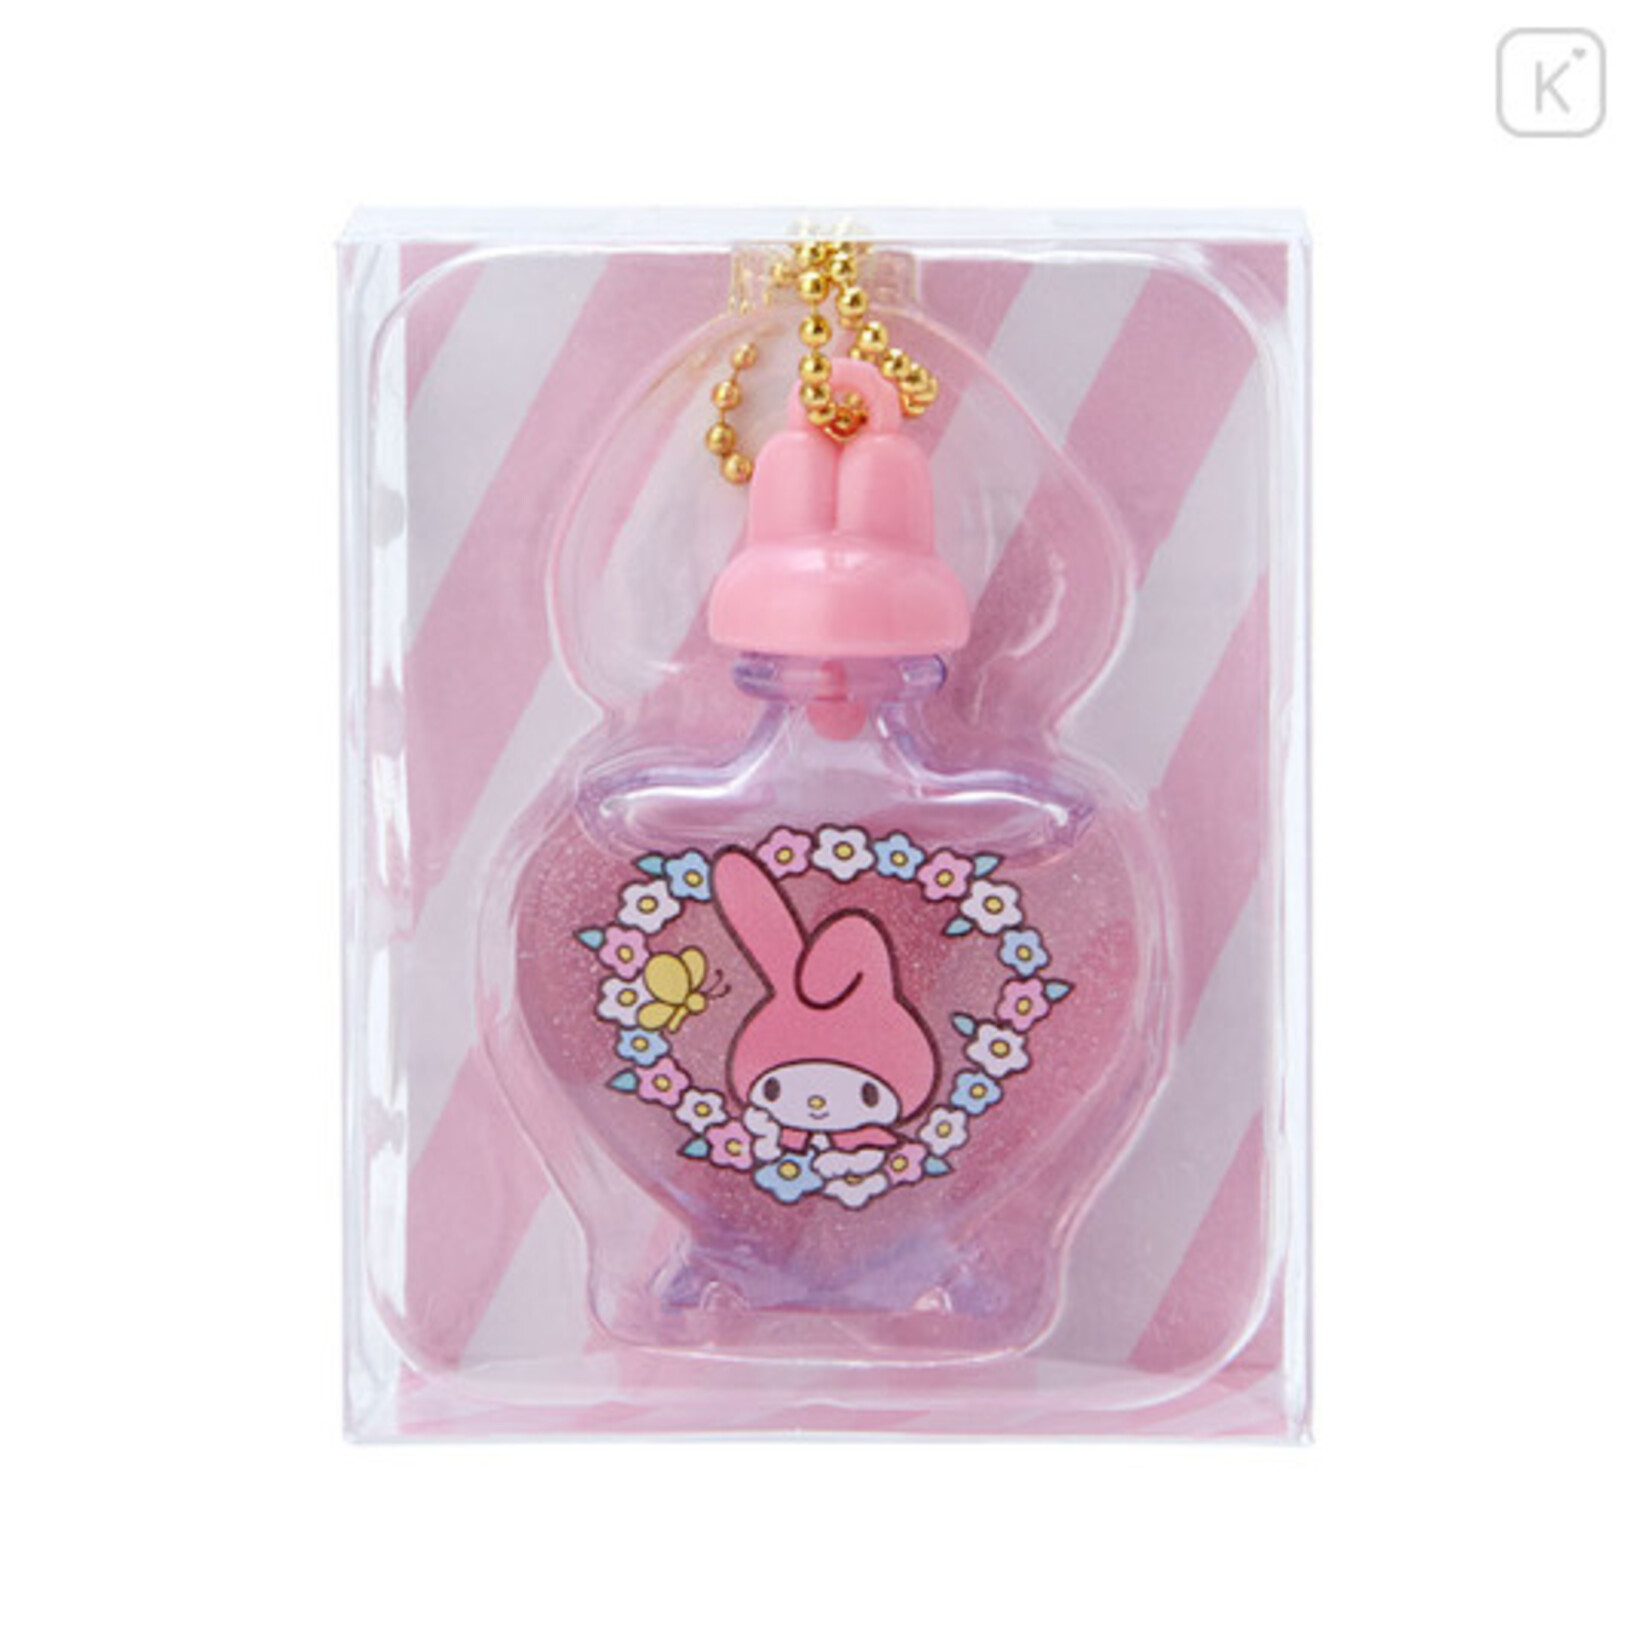 Sanrio My Melody Perfume Bottle Keychain